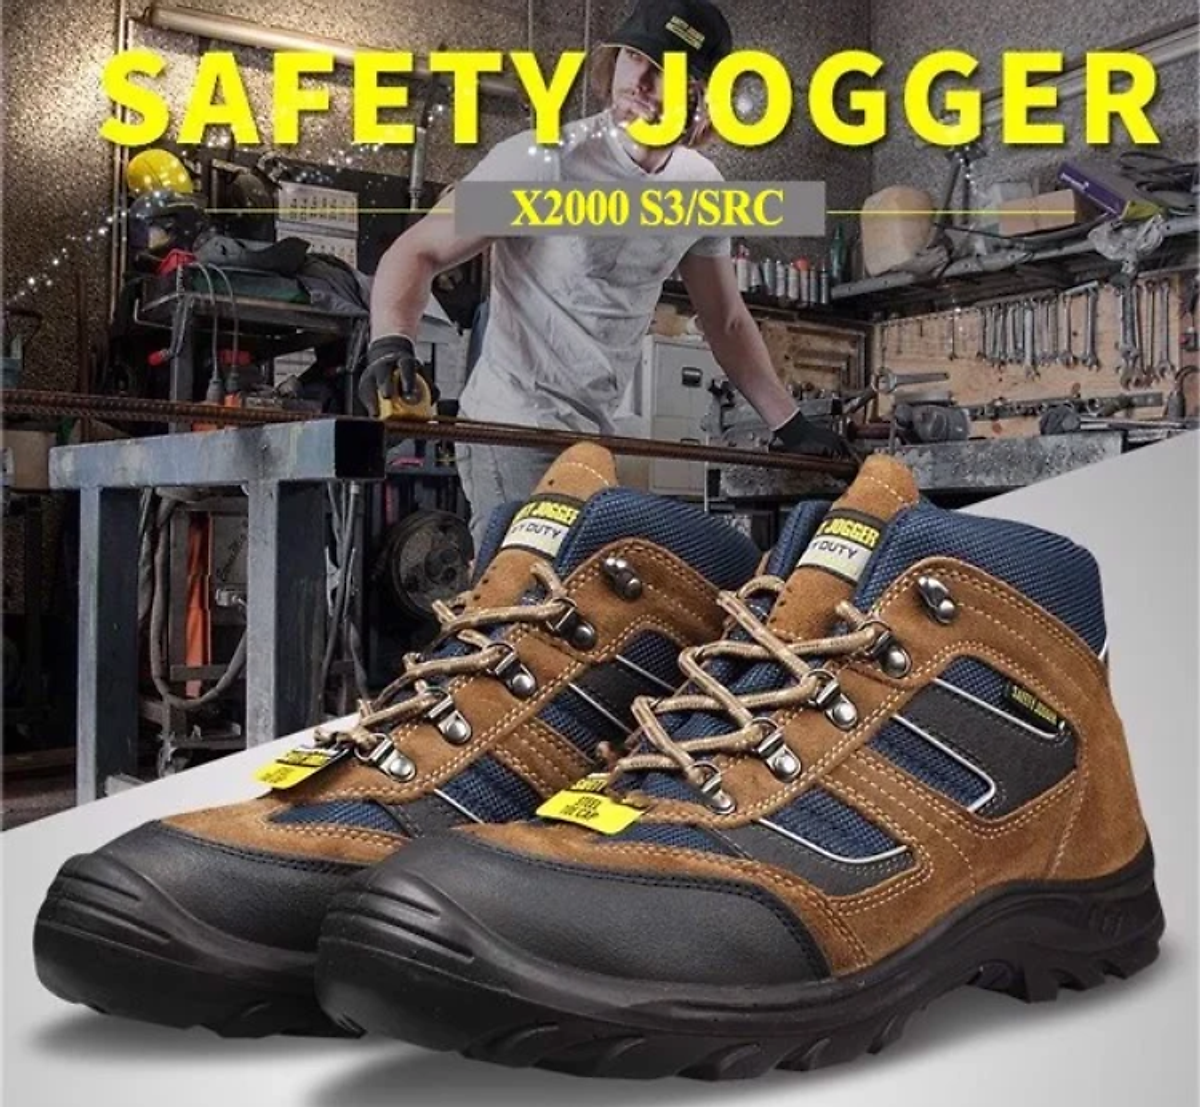 Giày bảo hộ Safety Jogger X200031